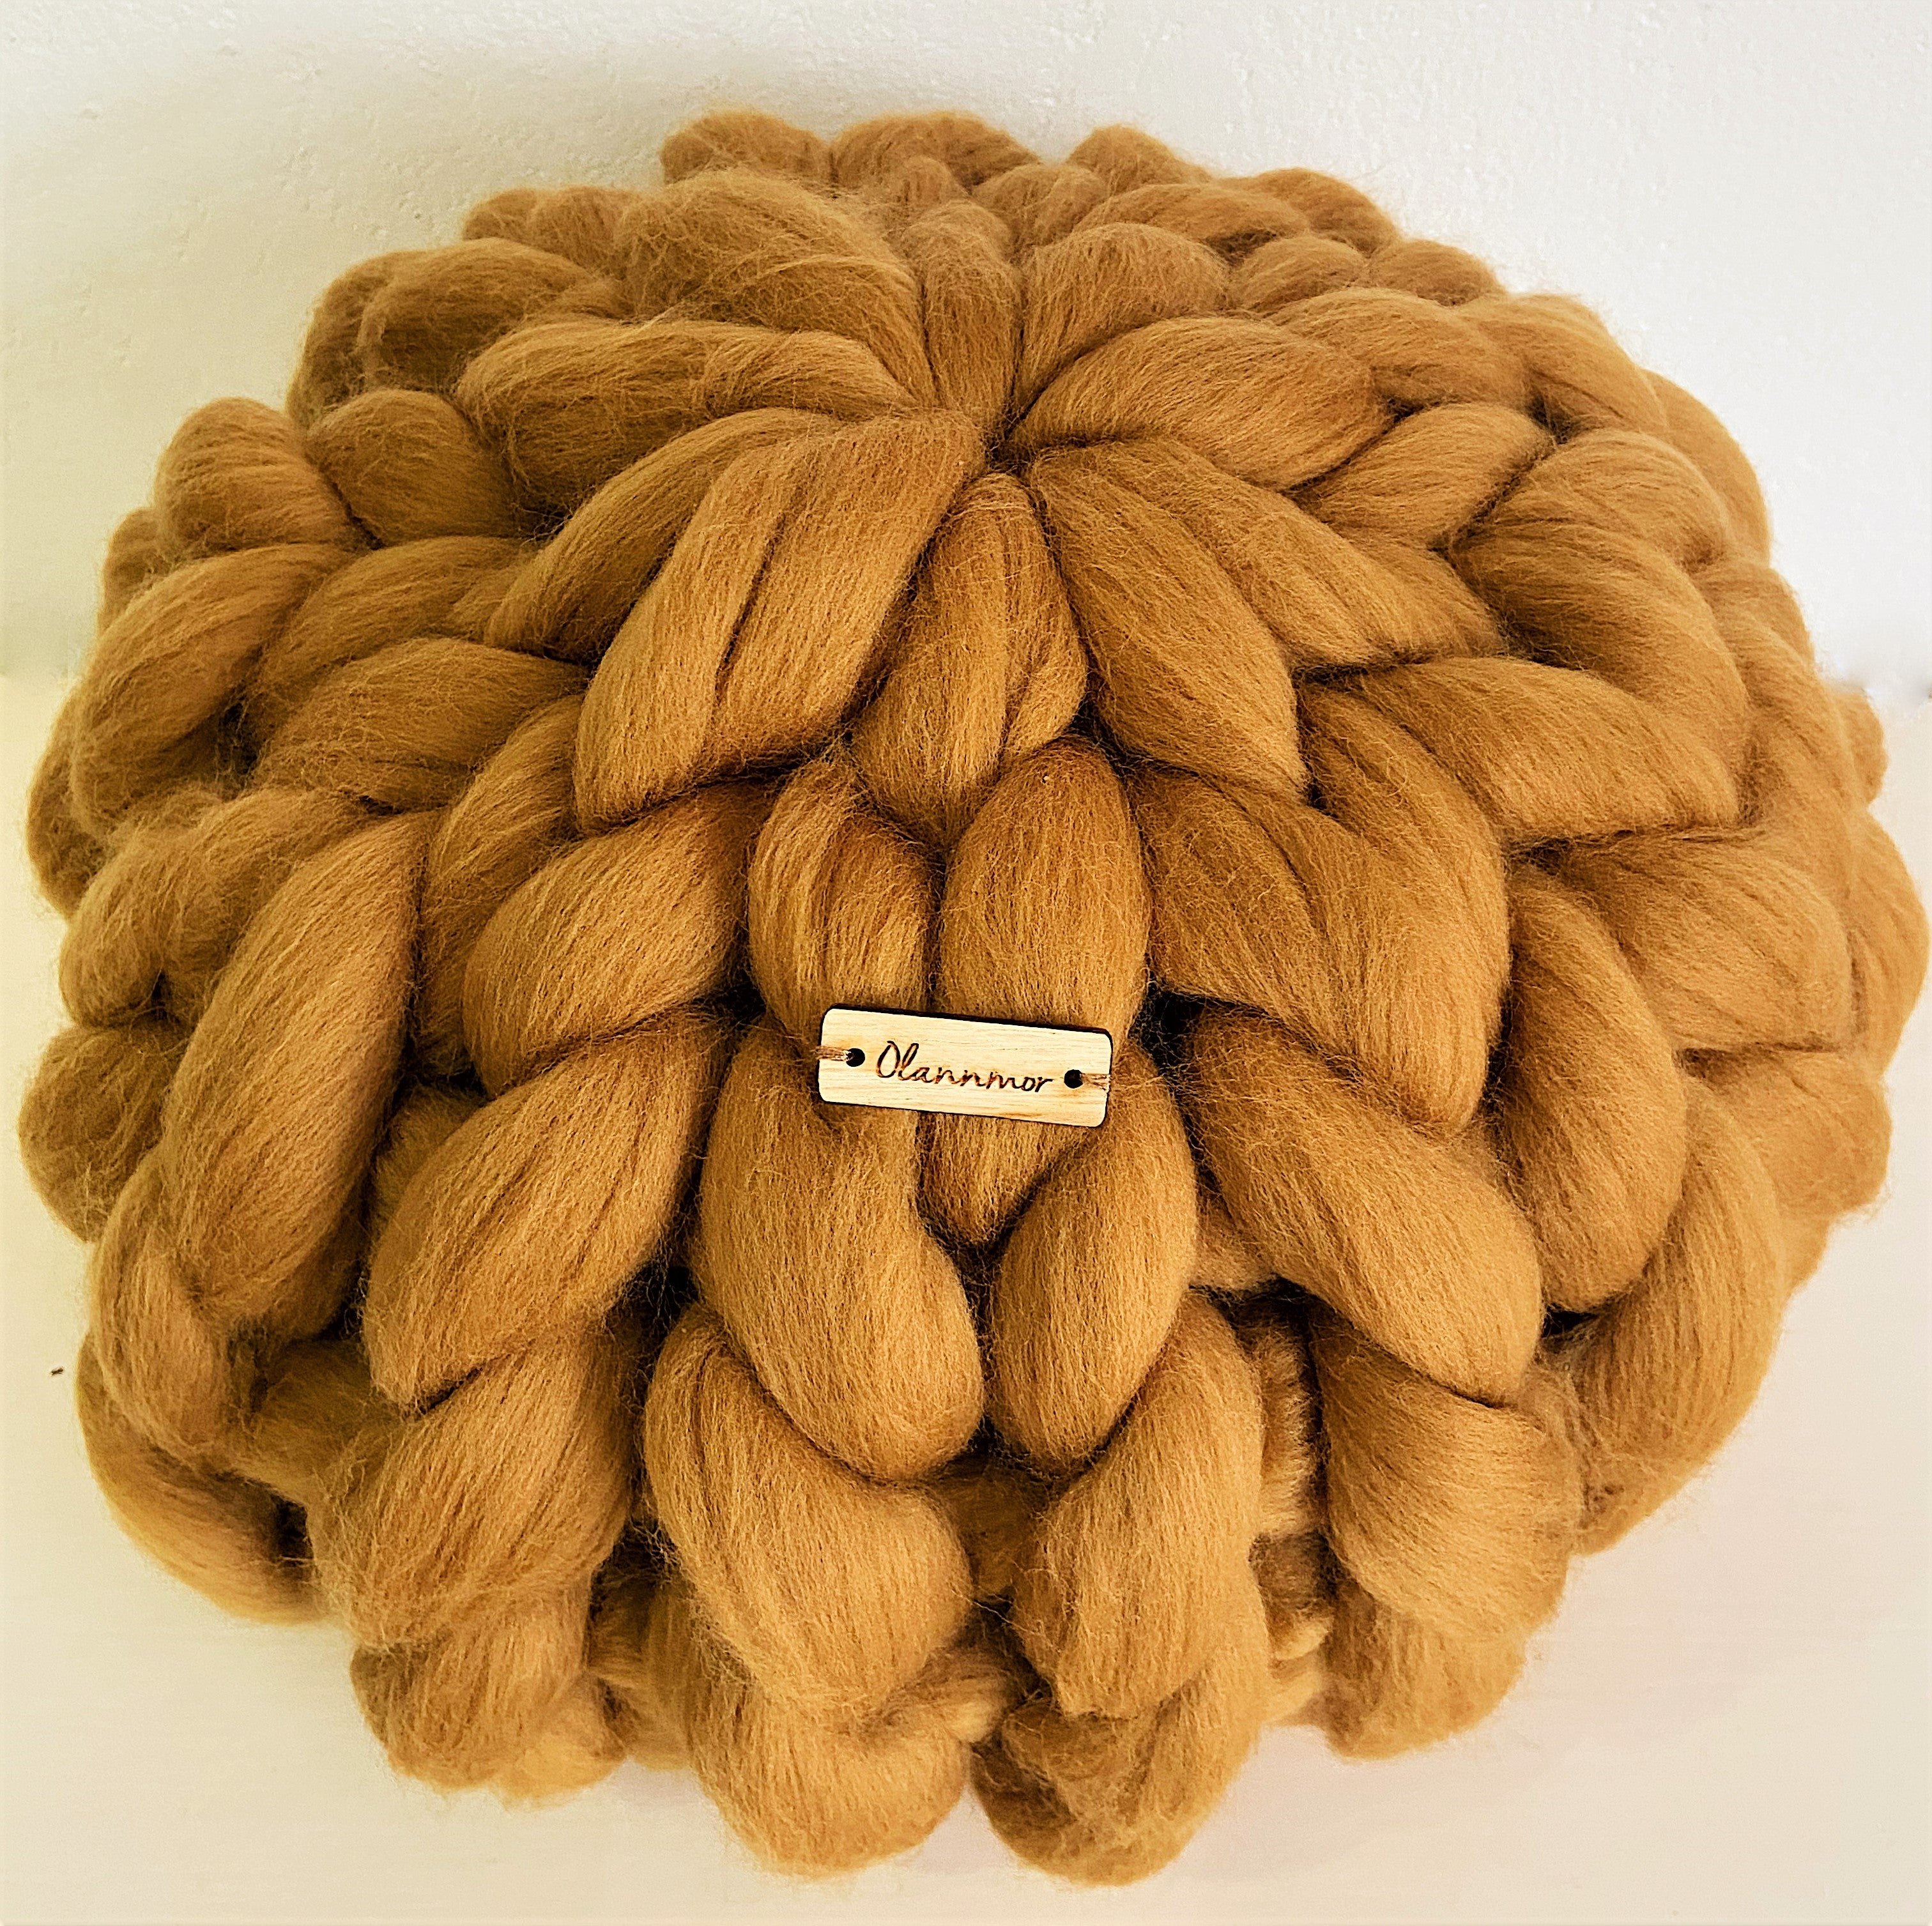 Olannmor Merino Wool Round Cushion - Marrakech